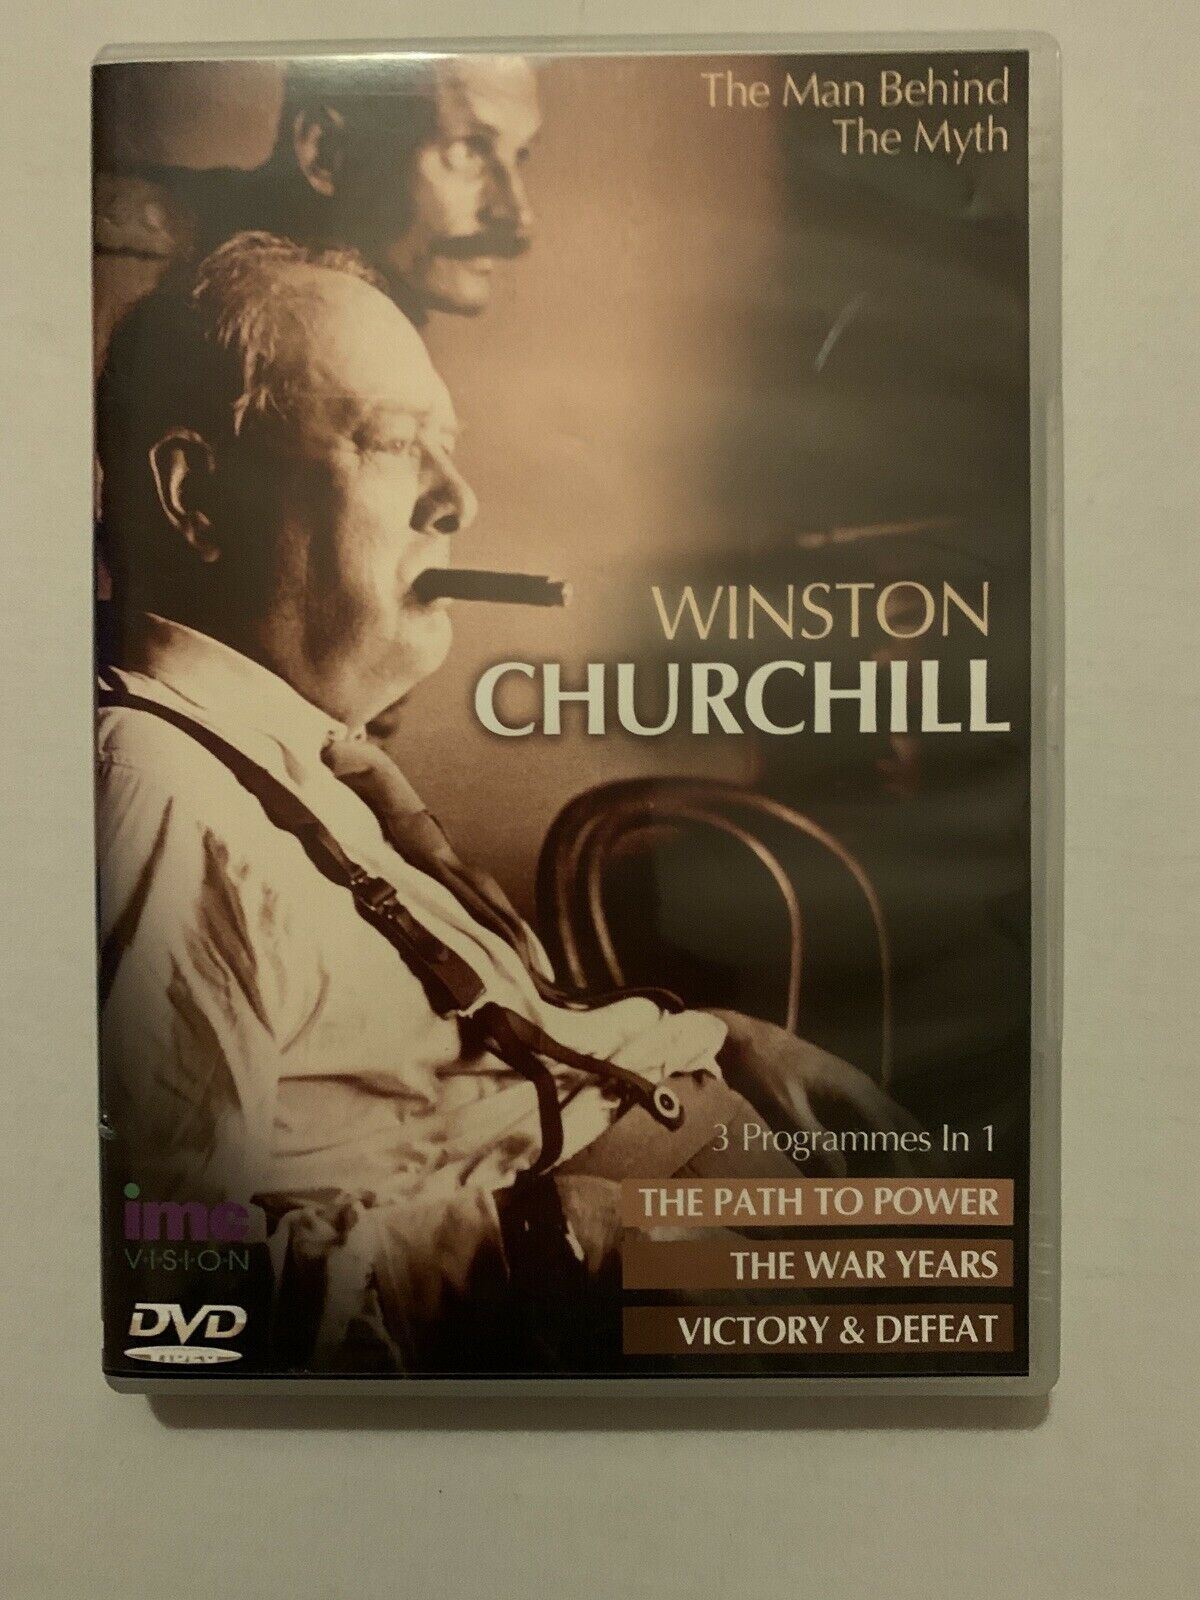 Winston Churchill - The Man Behind The Myth (DVD, 2002) *Region 2*